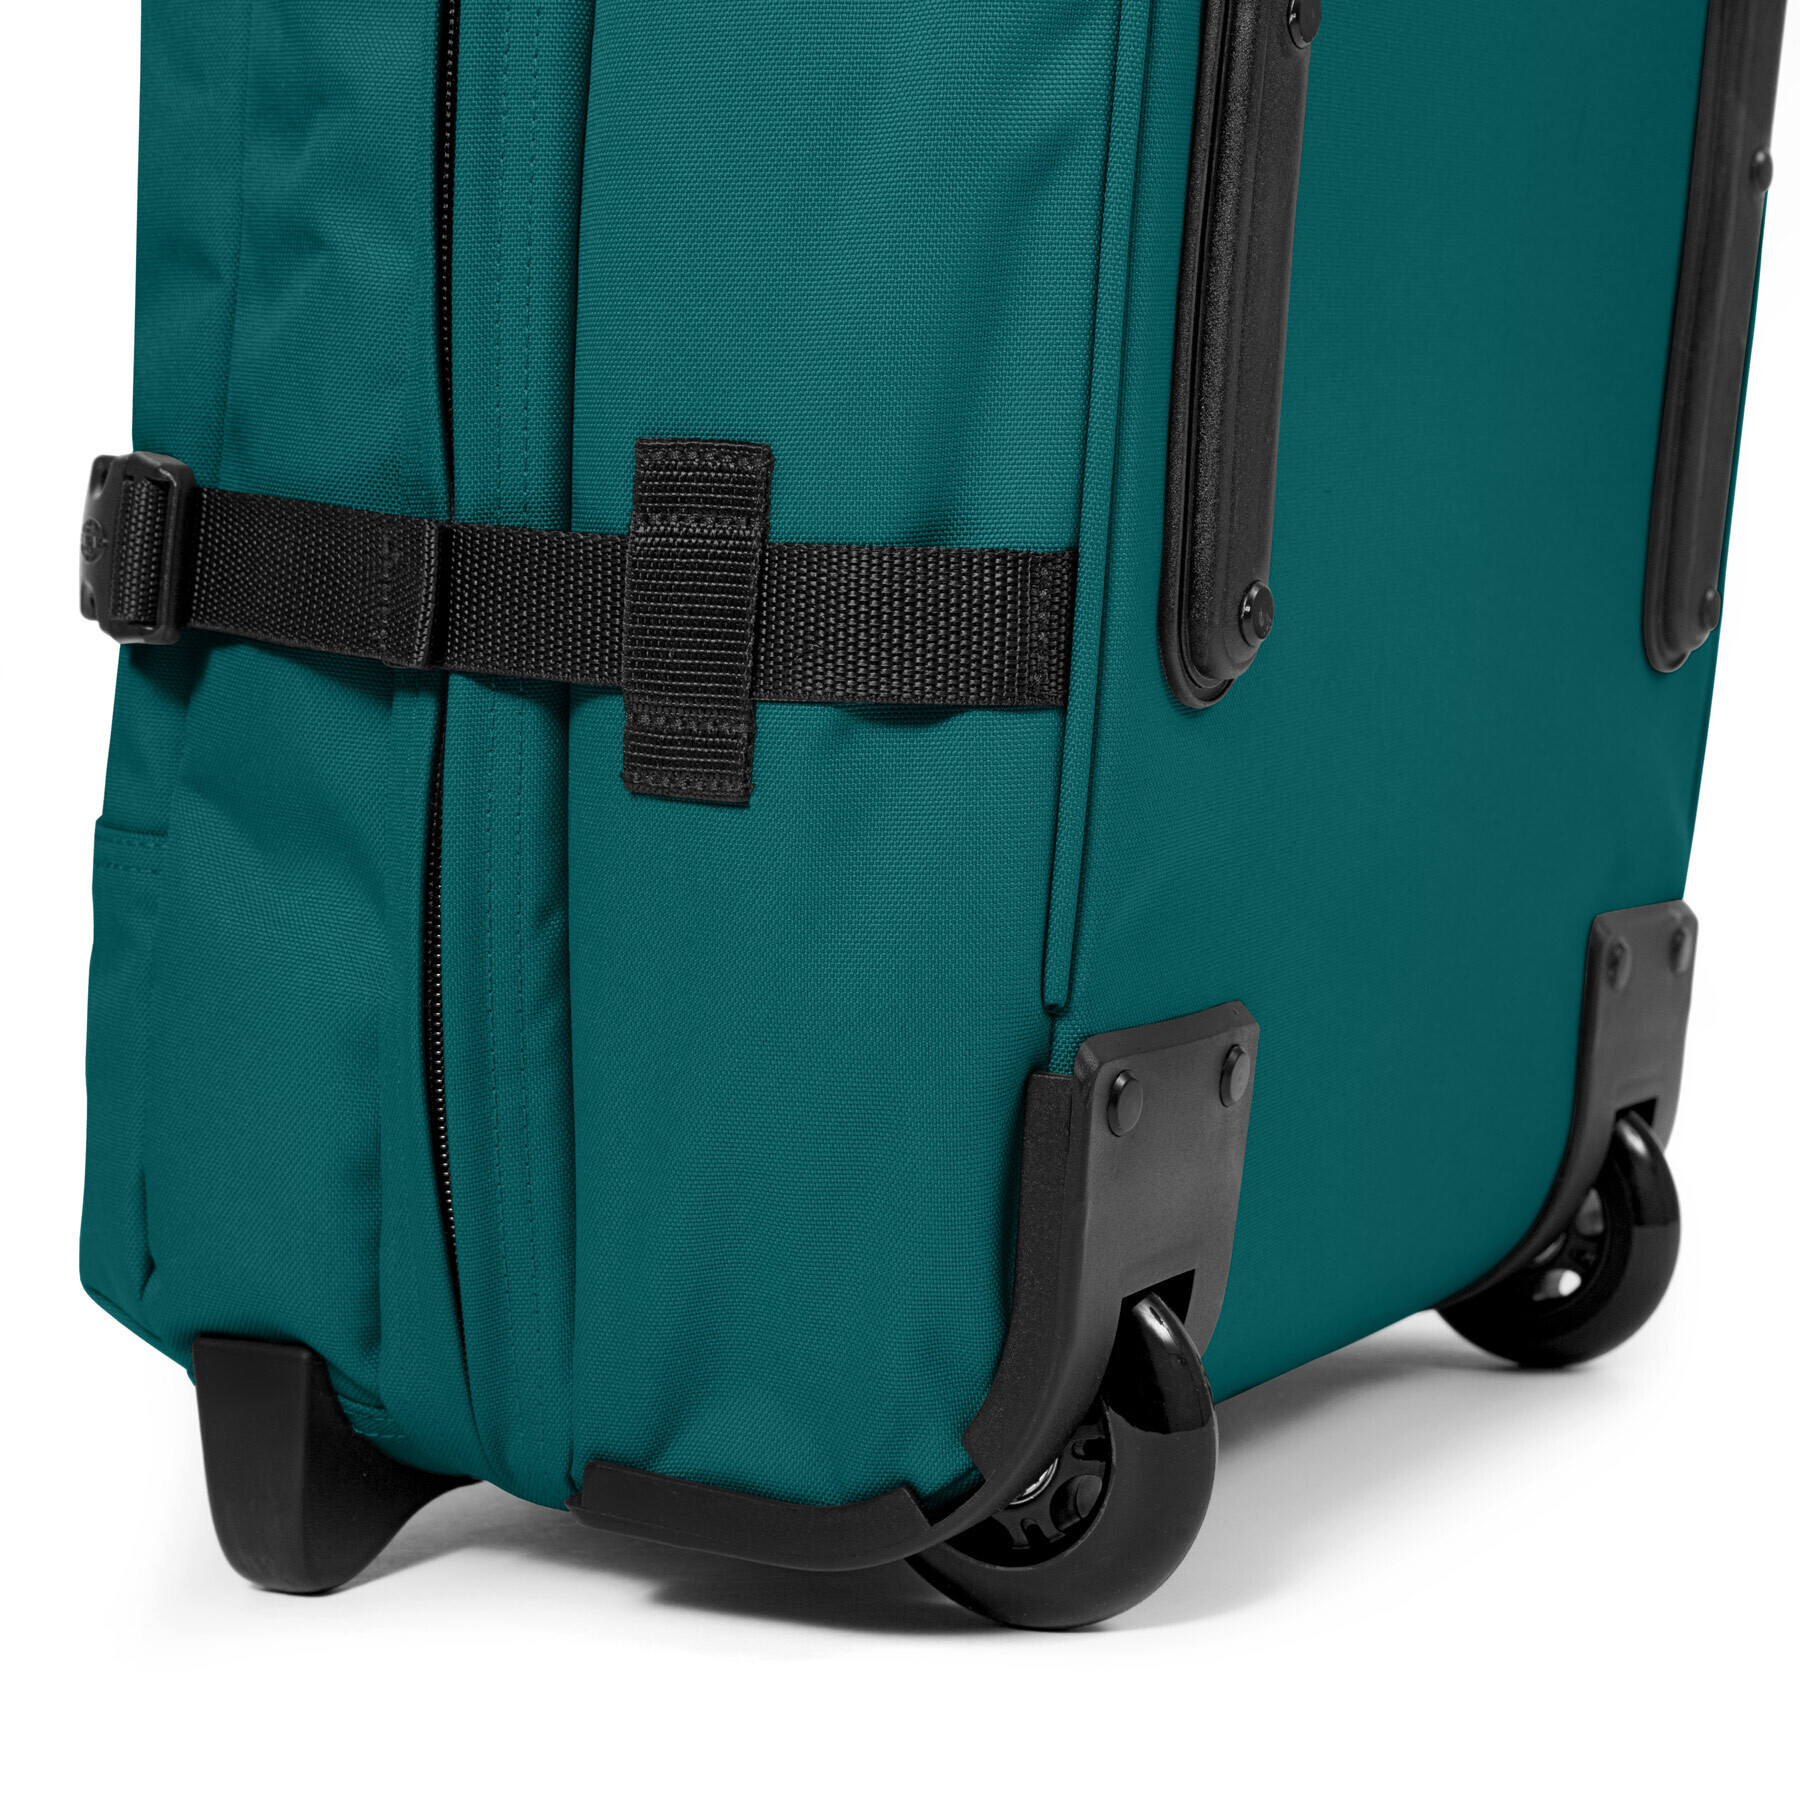 Suitcase Eastpak Tranverz